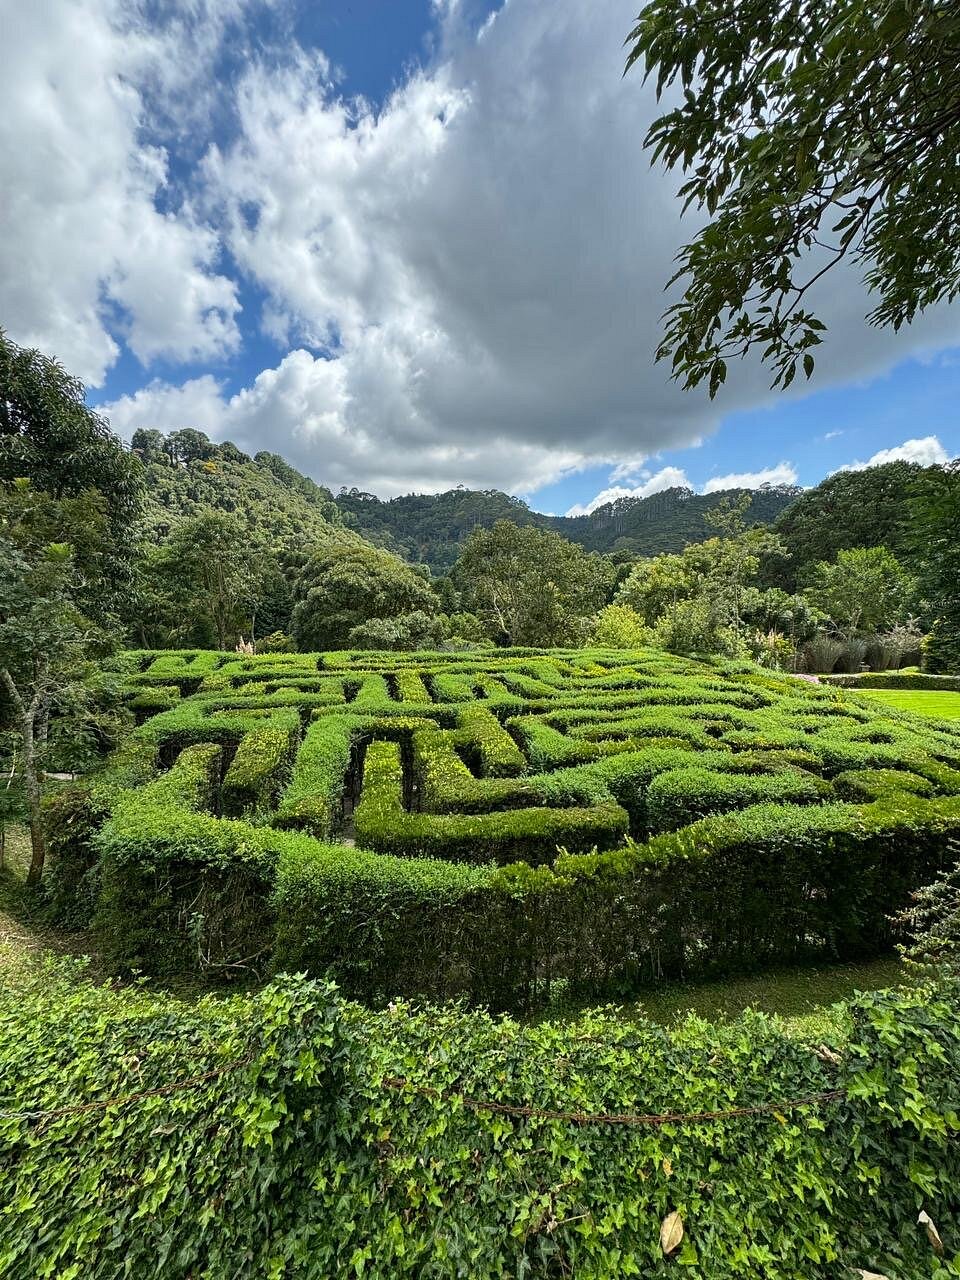 Hedge maze, greenery